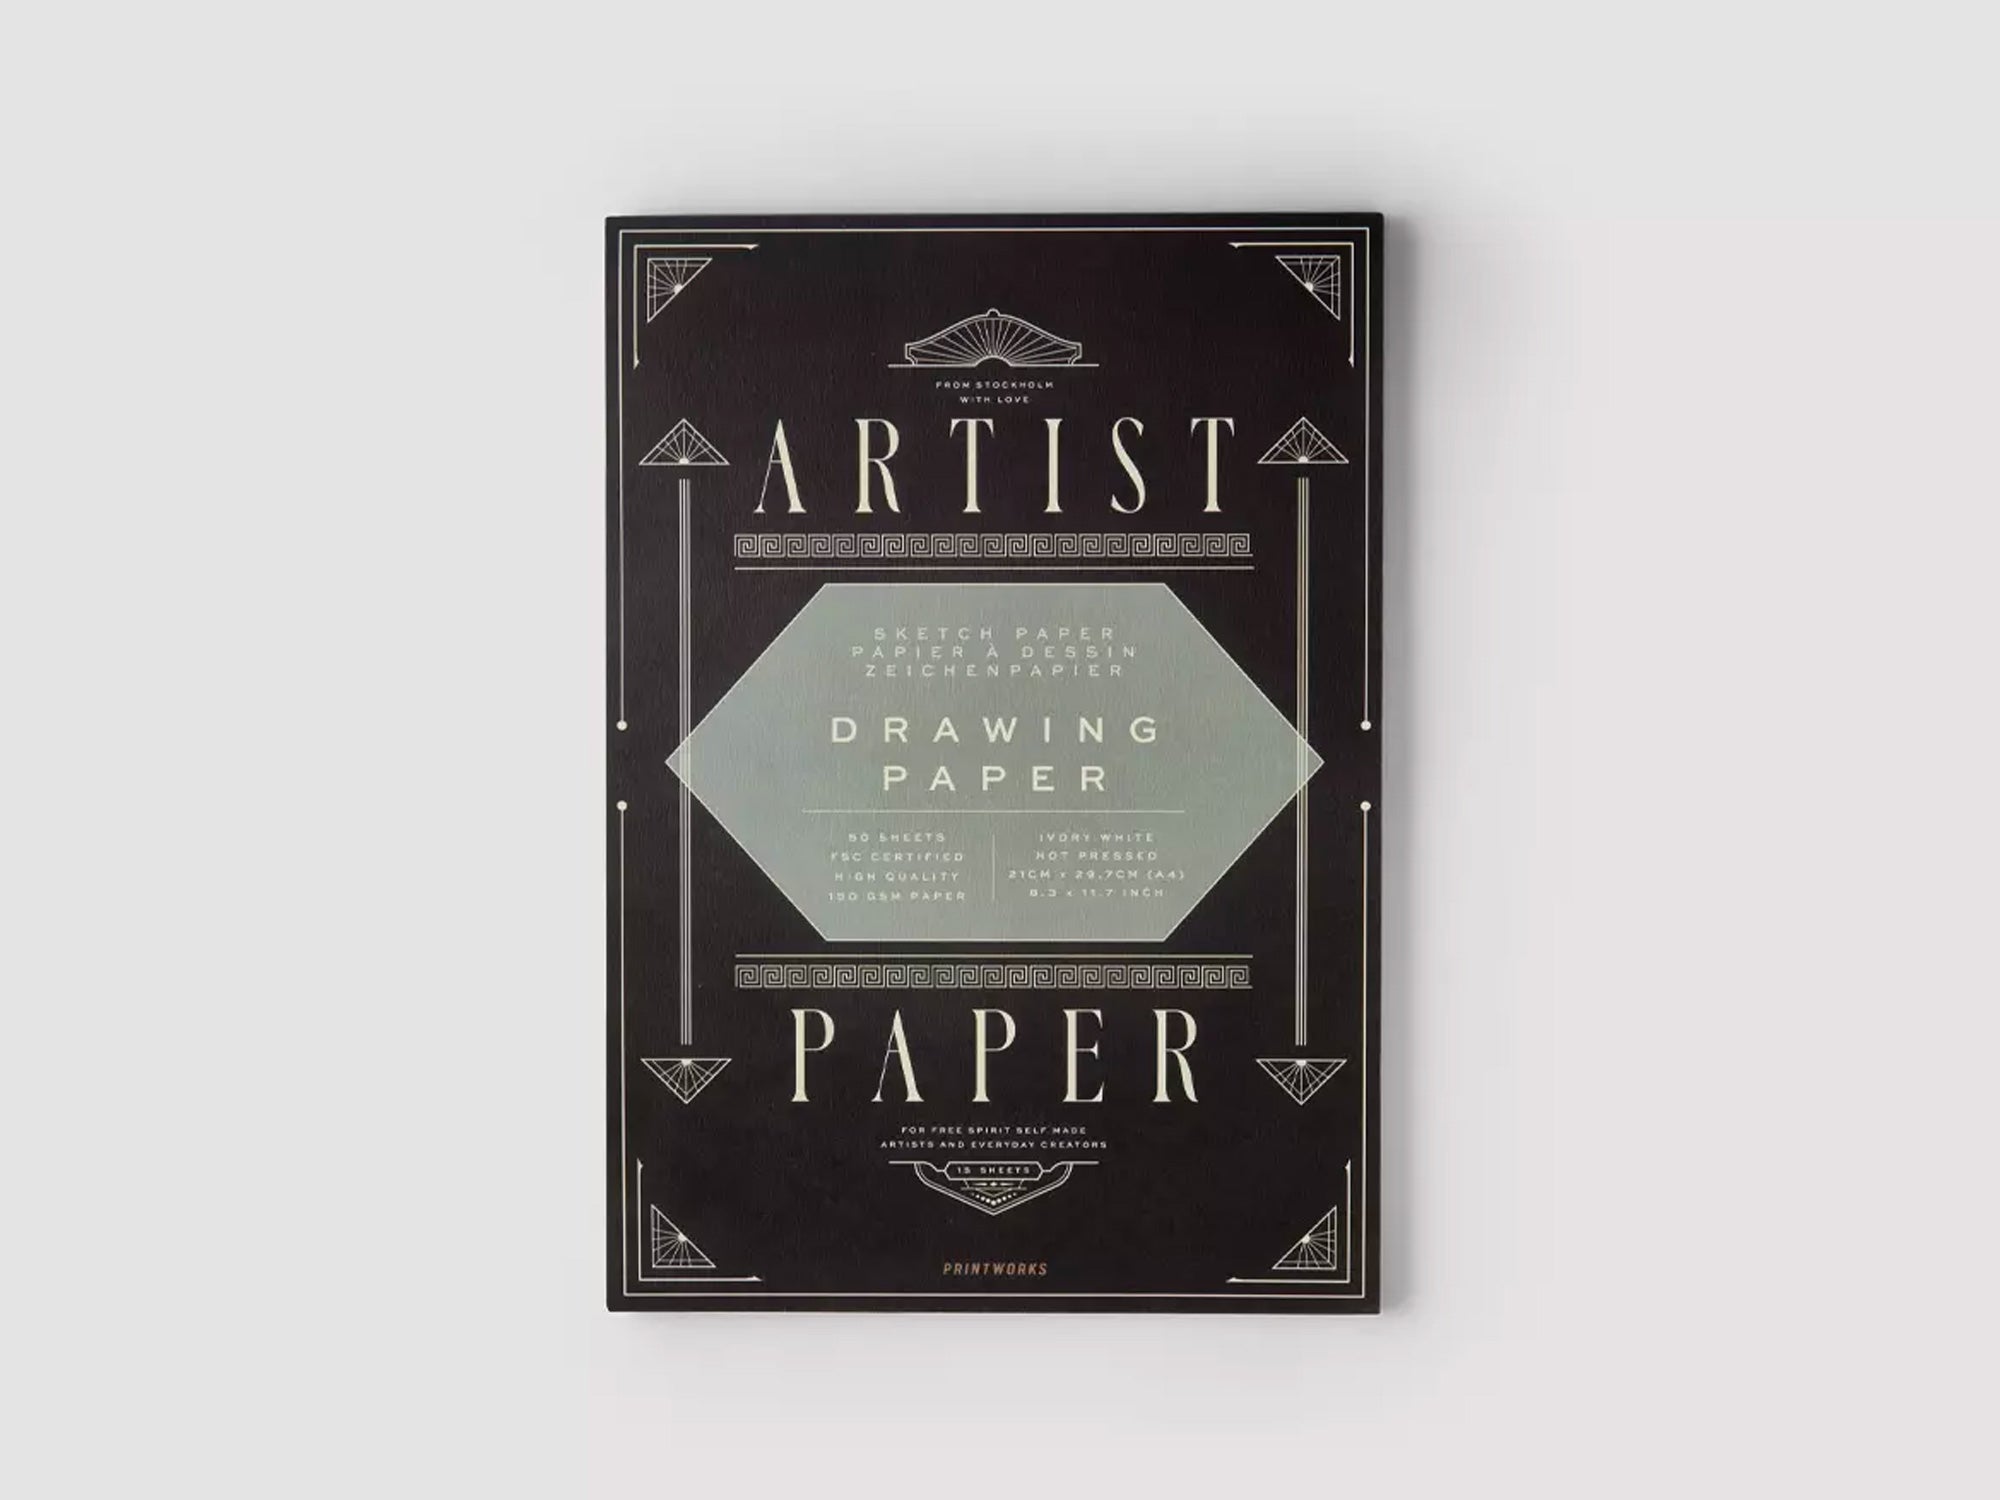 Print Works Drawing Artist Paper Pad 21cm x 30cm